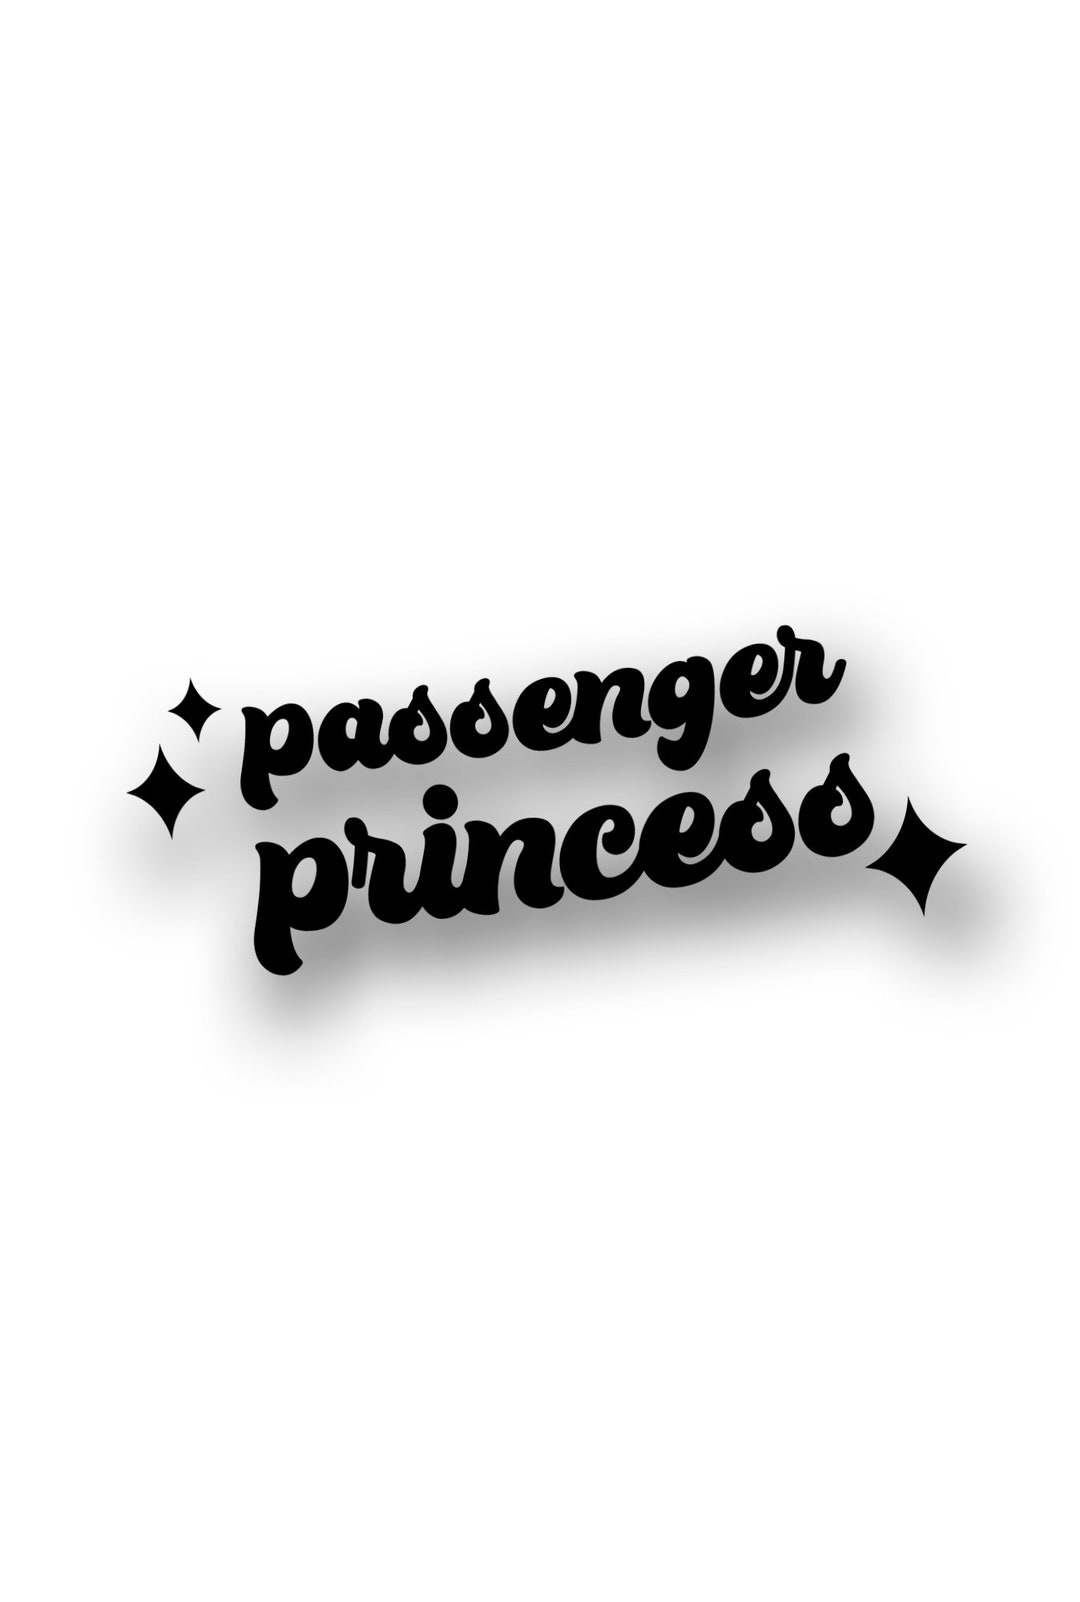 Passenger Princess Plotted Vinyl Sticker Car Sticker Decal Etsy